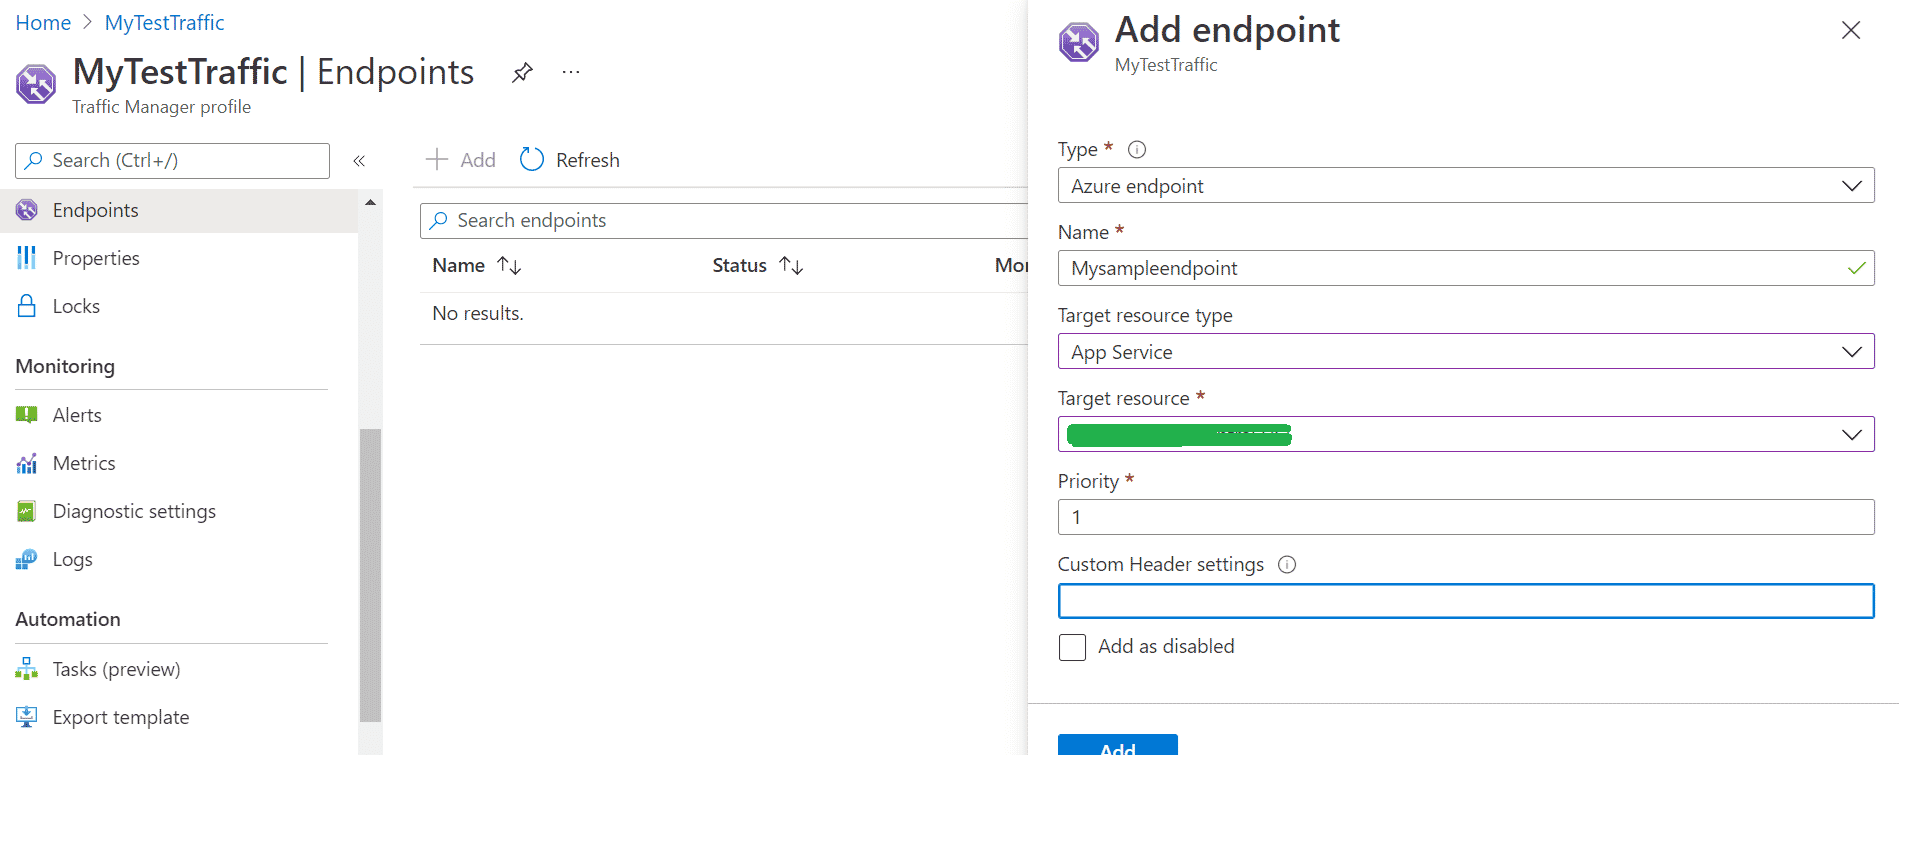 Add Azure Endpoint Details